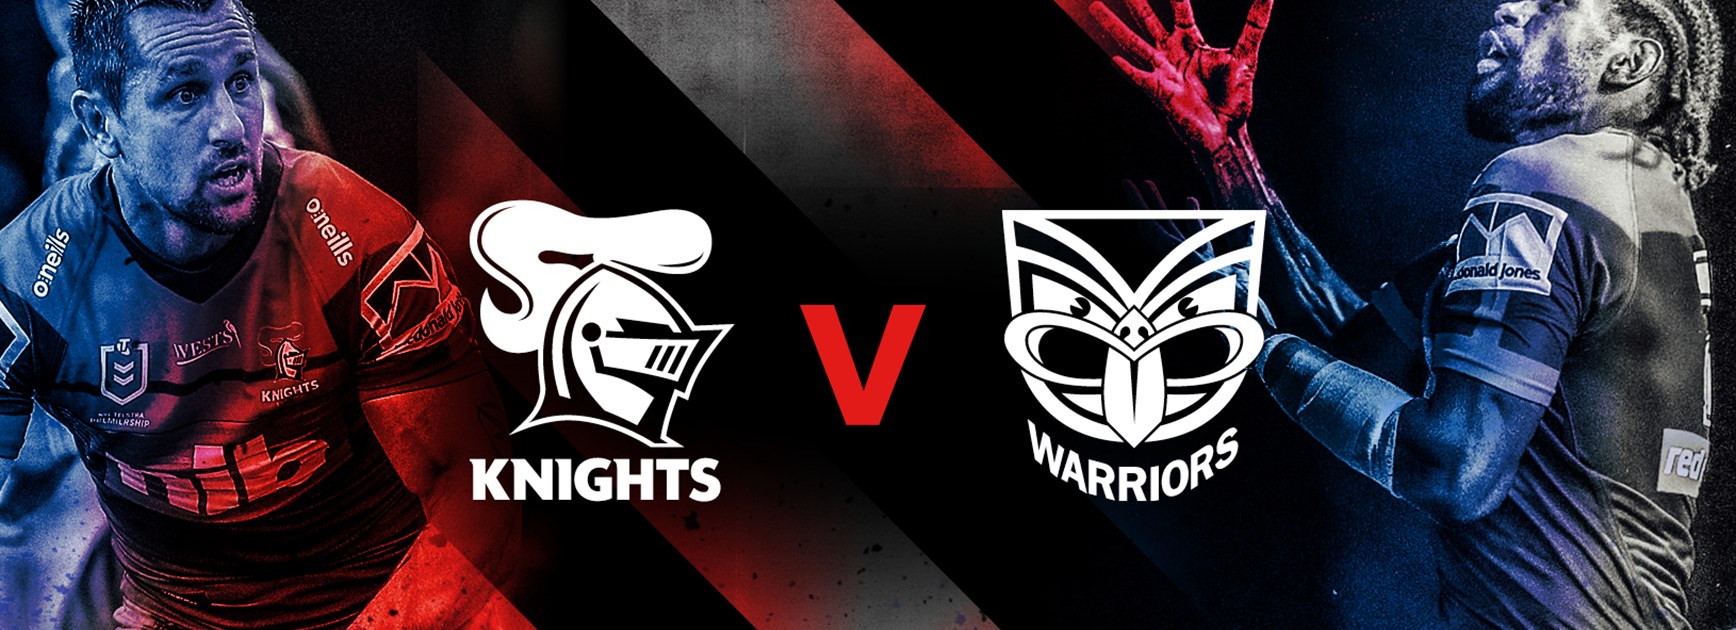 Knights v Warriors Round 1 NRL team list